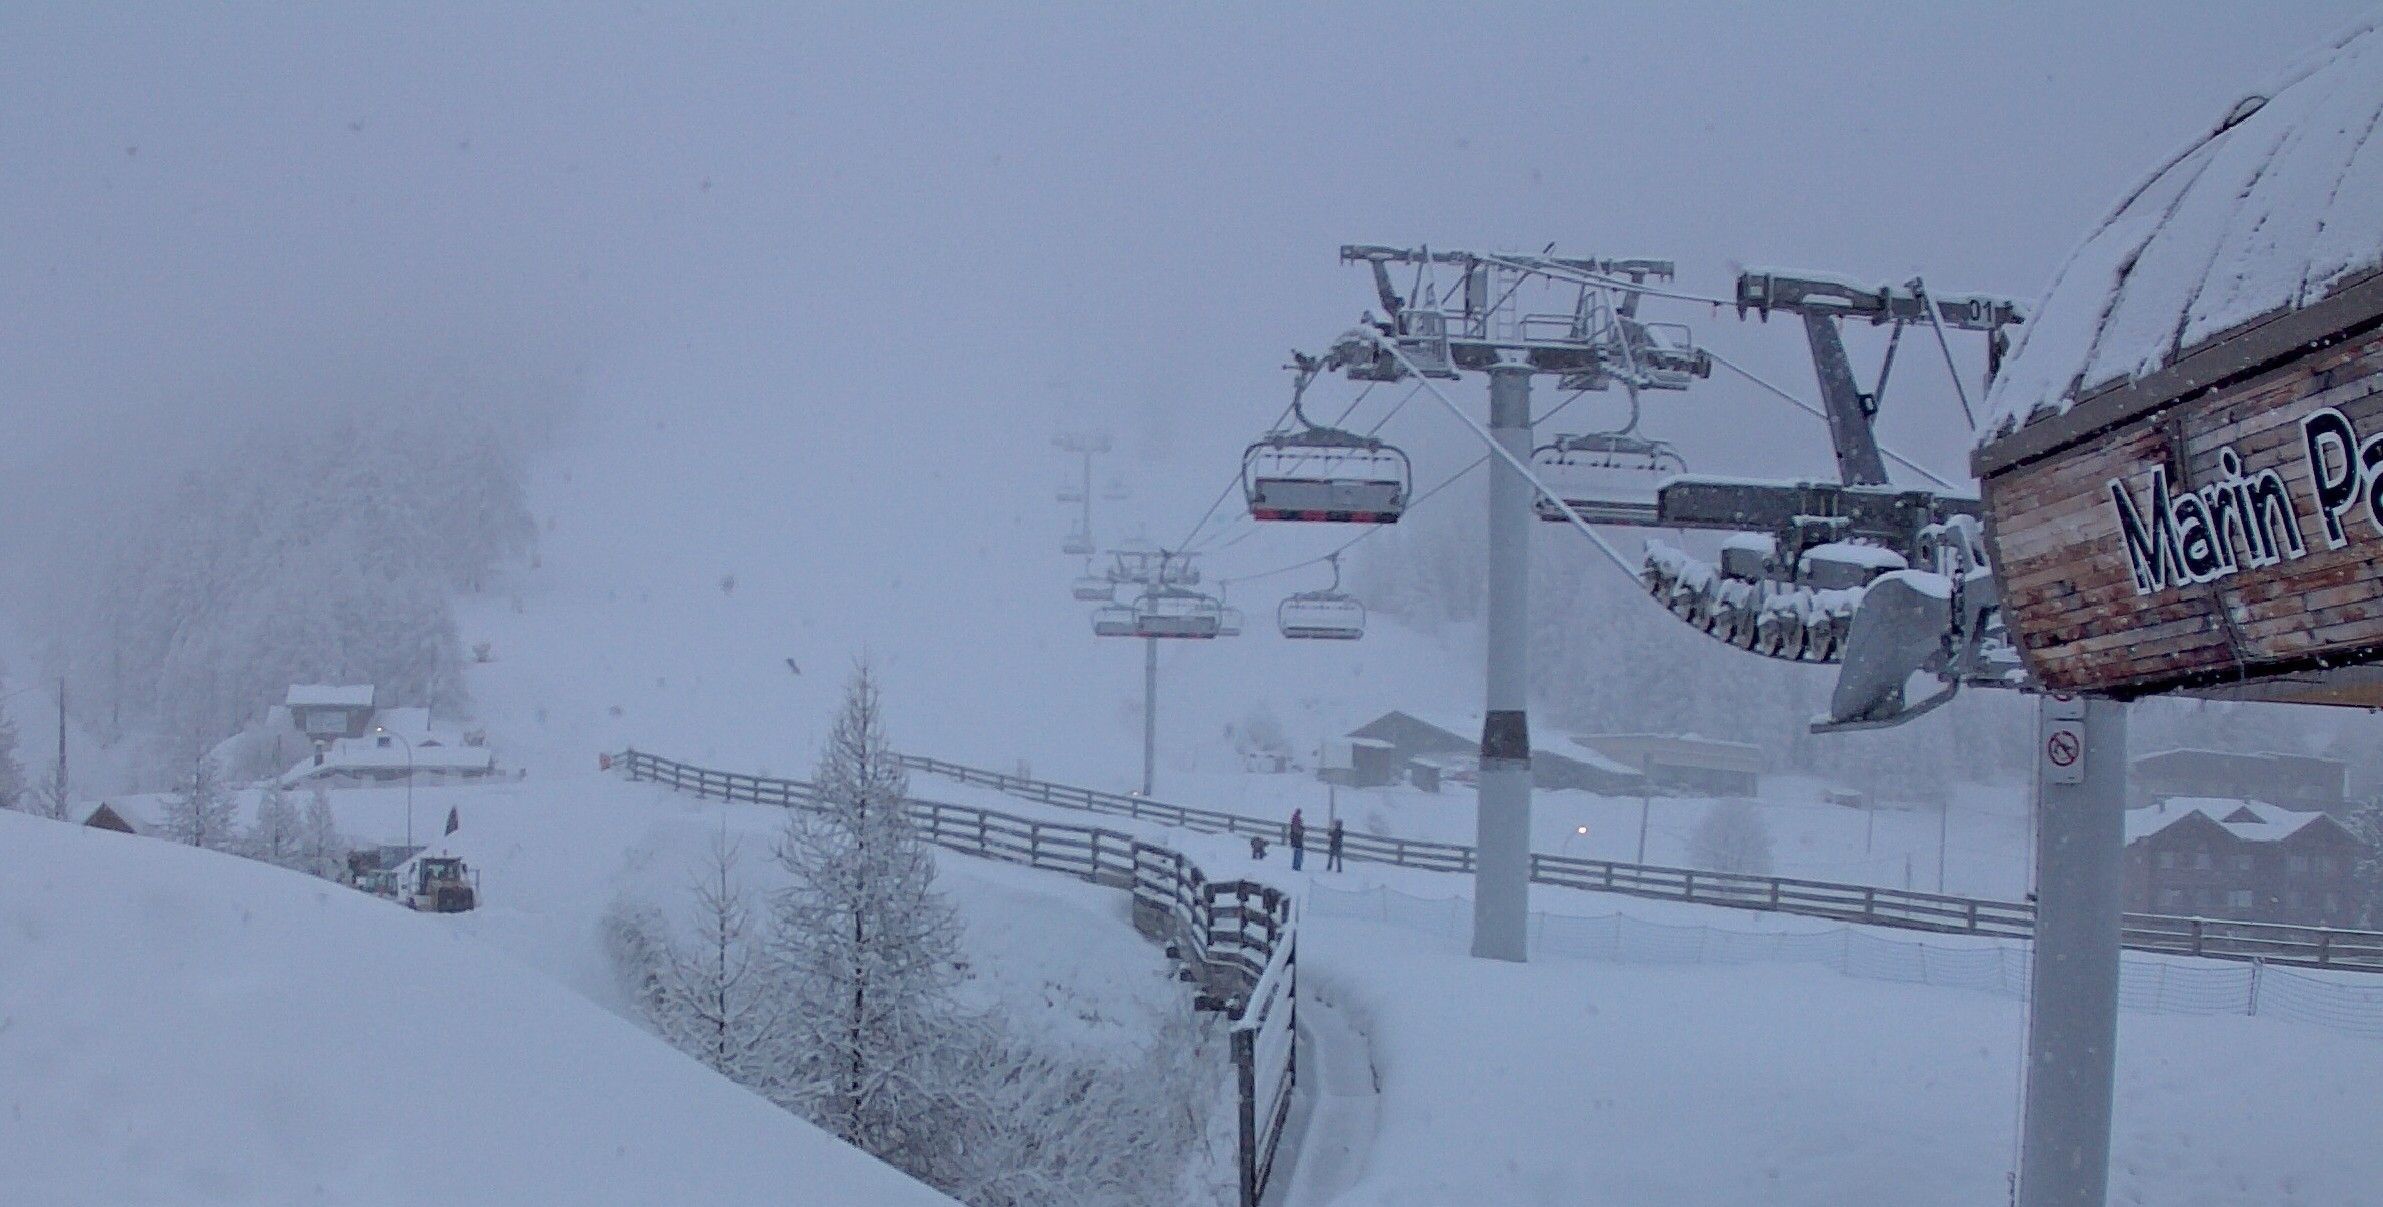 Het sneeuwt al in de Zuid Franse Alpen (bron: valdallos.com)